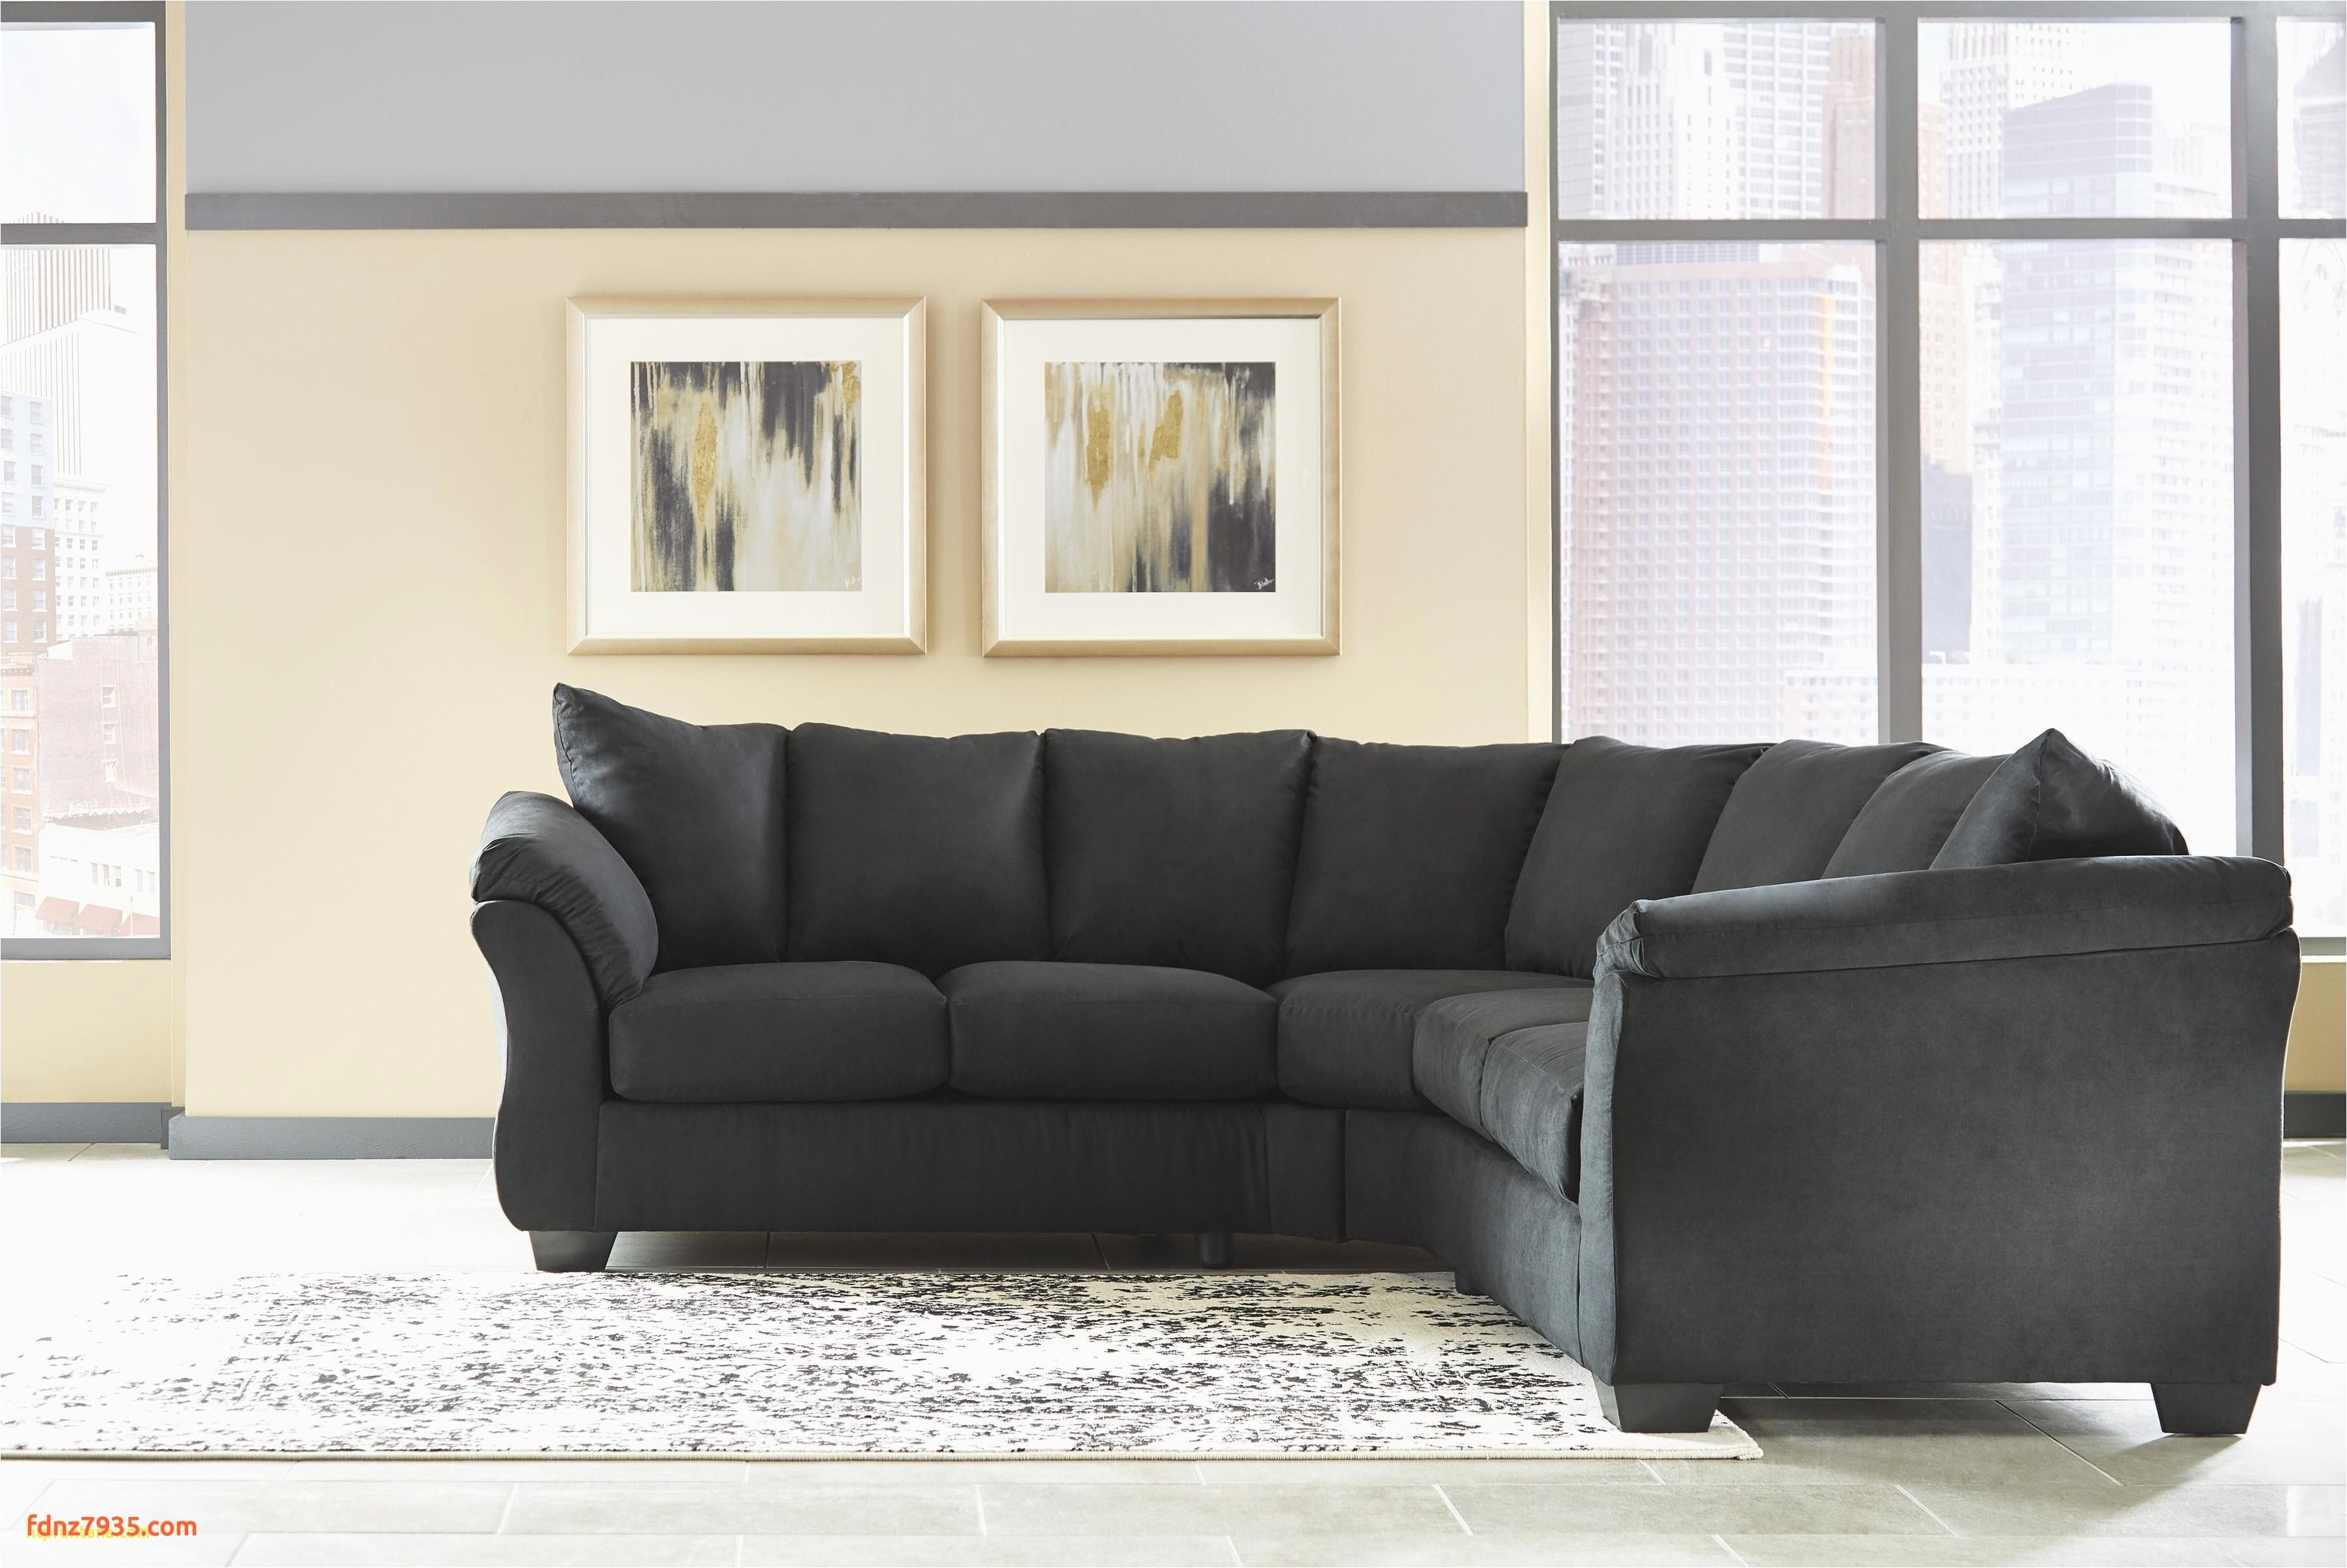 Best Place to Buy Leather sofa Near Me Leather sofa Near Me Fresh sofa Design